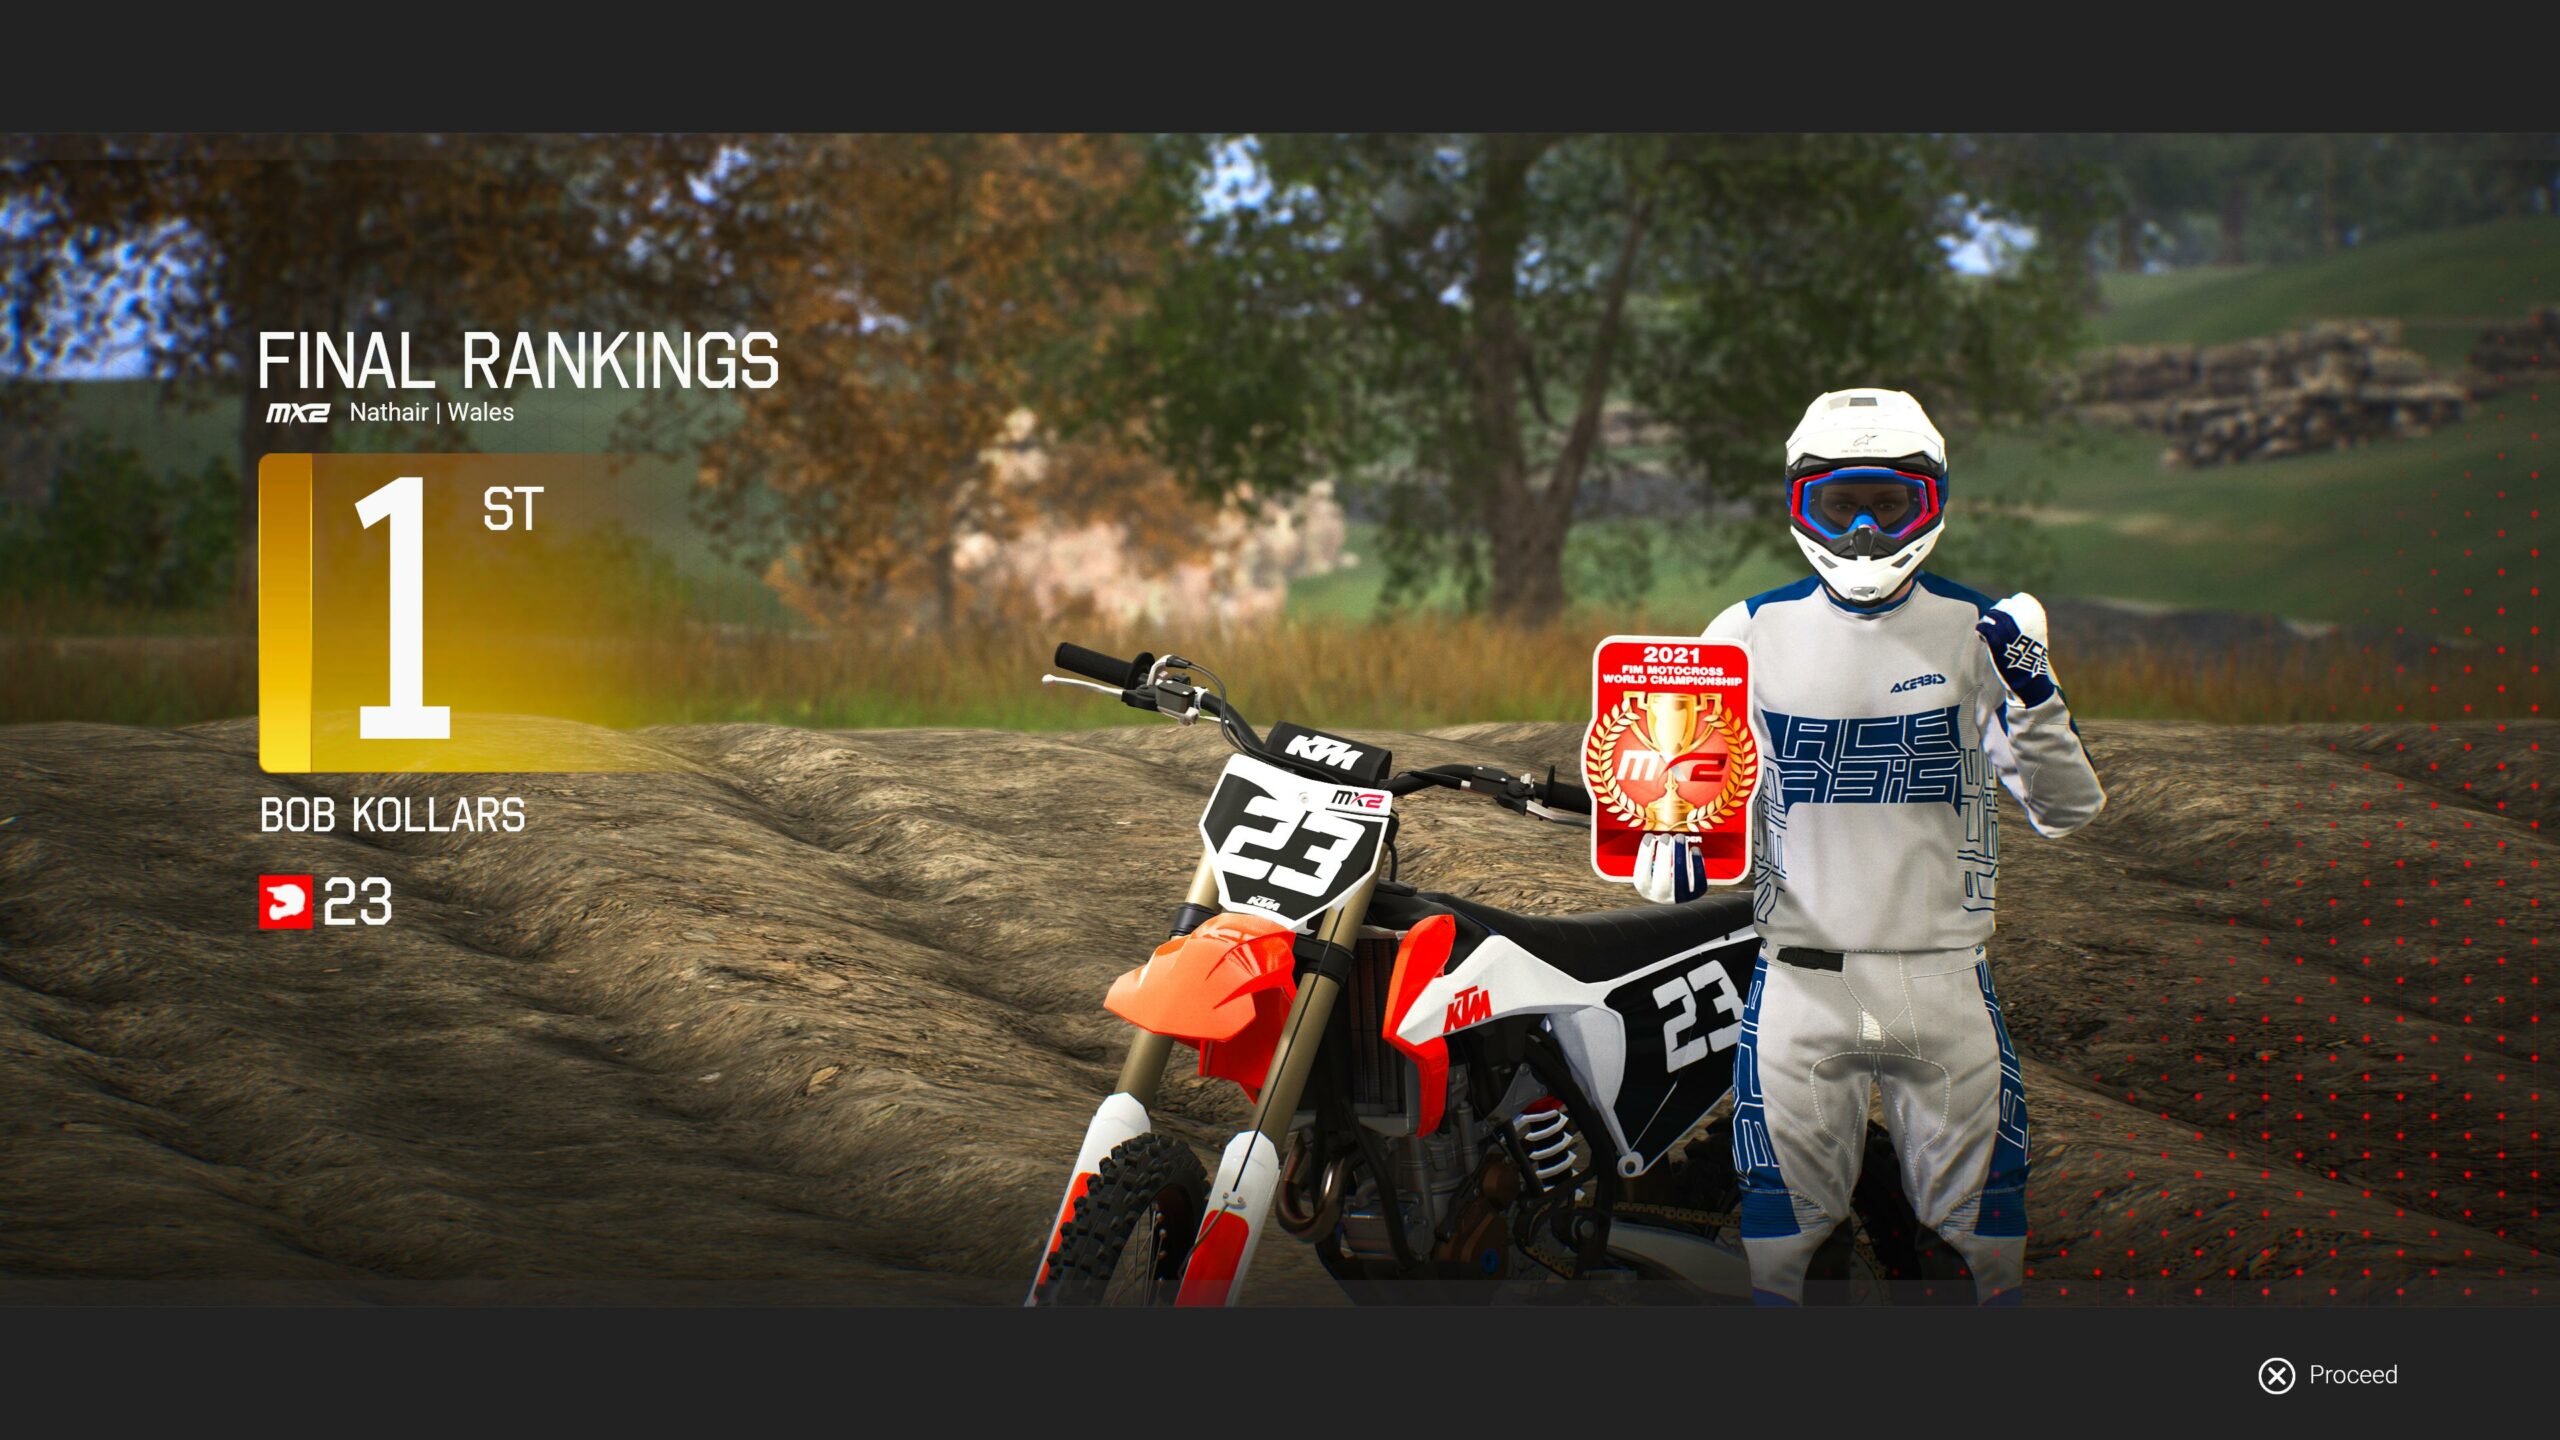 MXGP 2021 - The Official Motocross Videogame